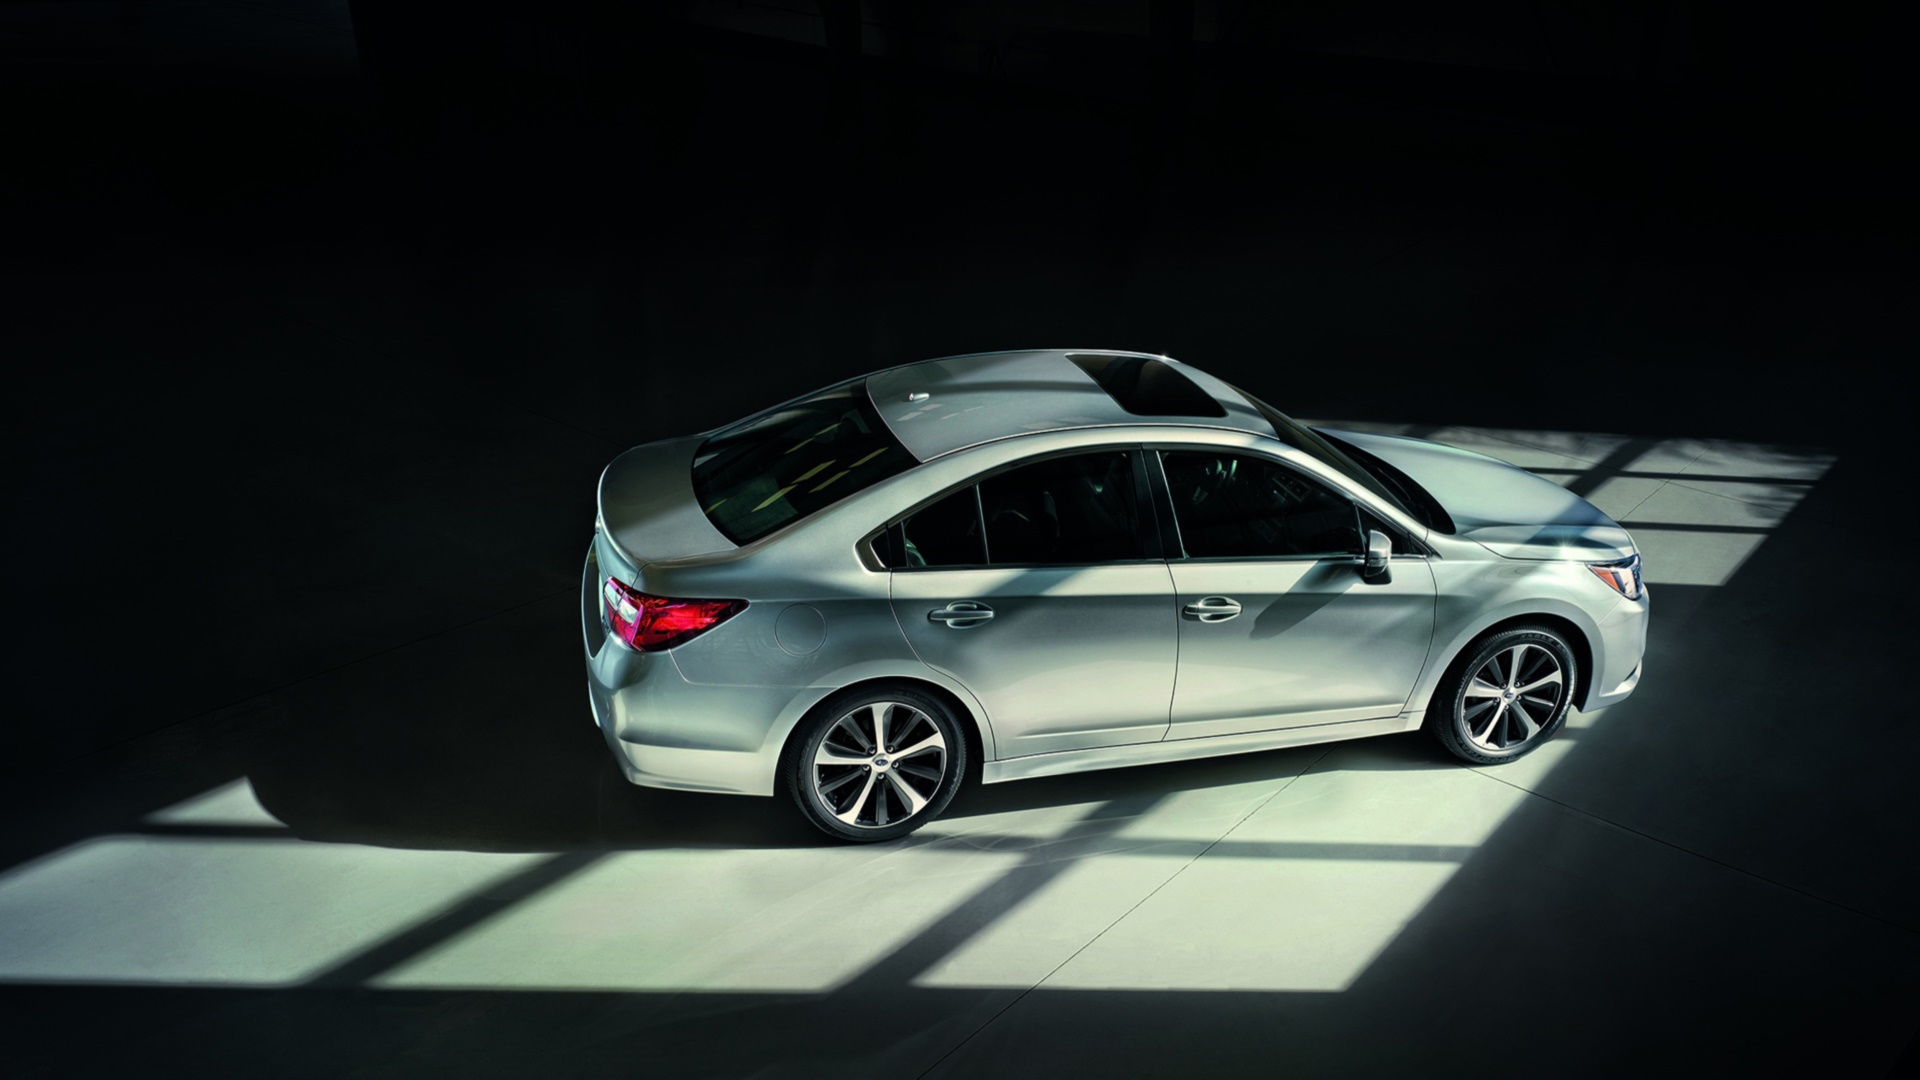 Vehicles 2015 Subaru Legacy HD Wallpaper | Background Image